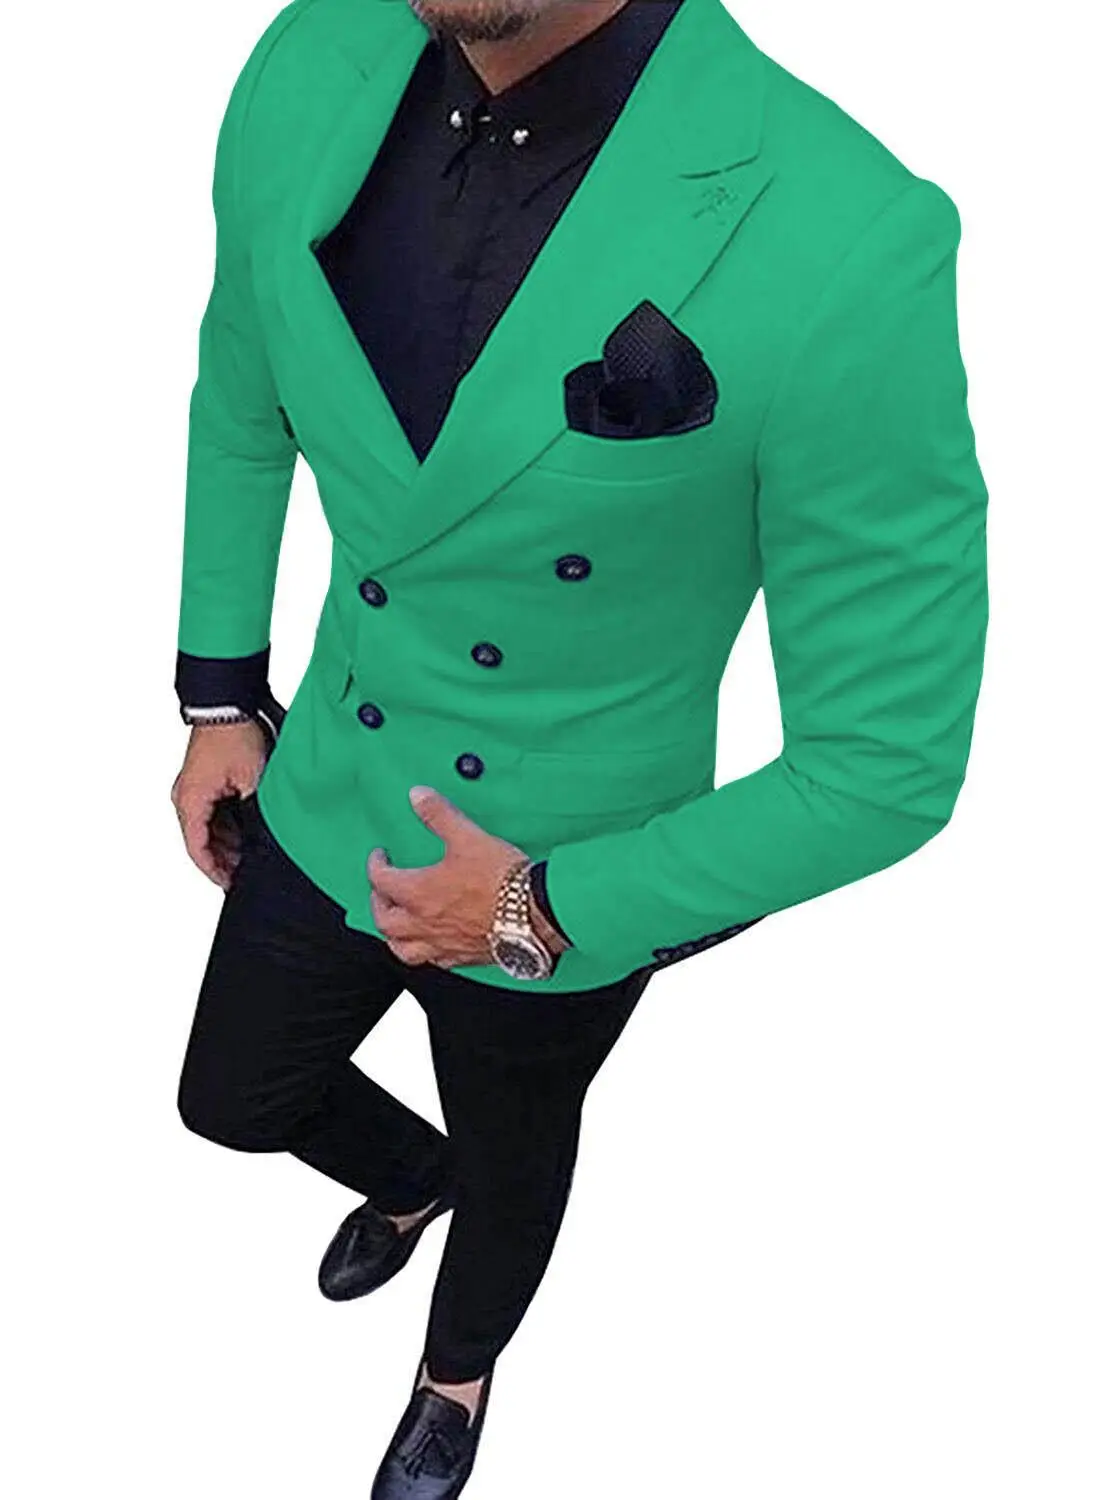 2022 New Green Men's Suit Double-Breasted 2-Piece Suit Trousers For Wedding Party (jacket+pants) suit men